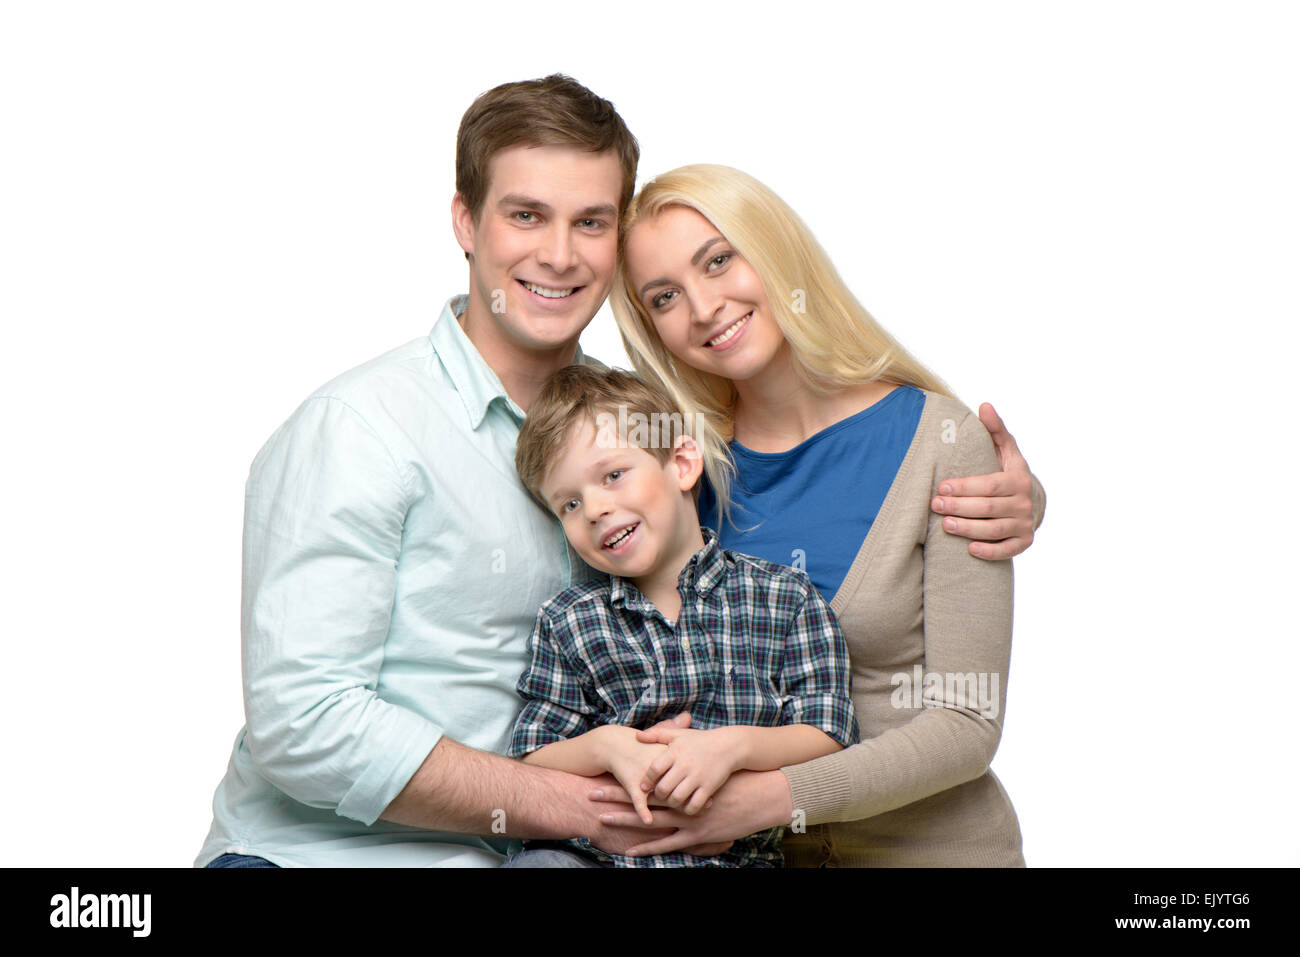 Smiling family of three enjoying time together Stock Photo